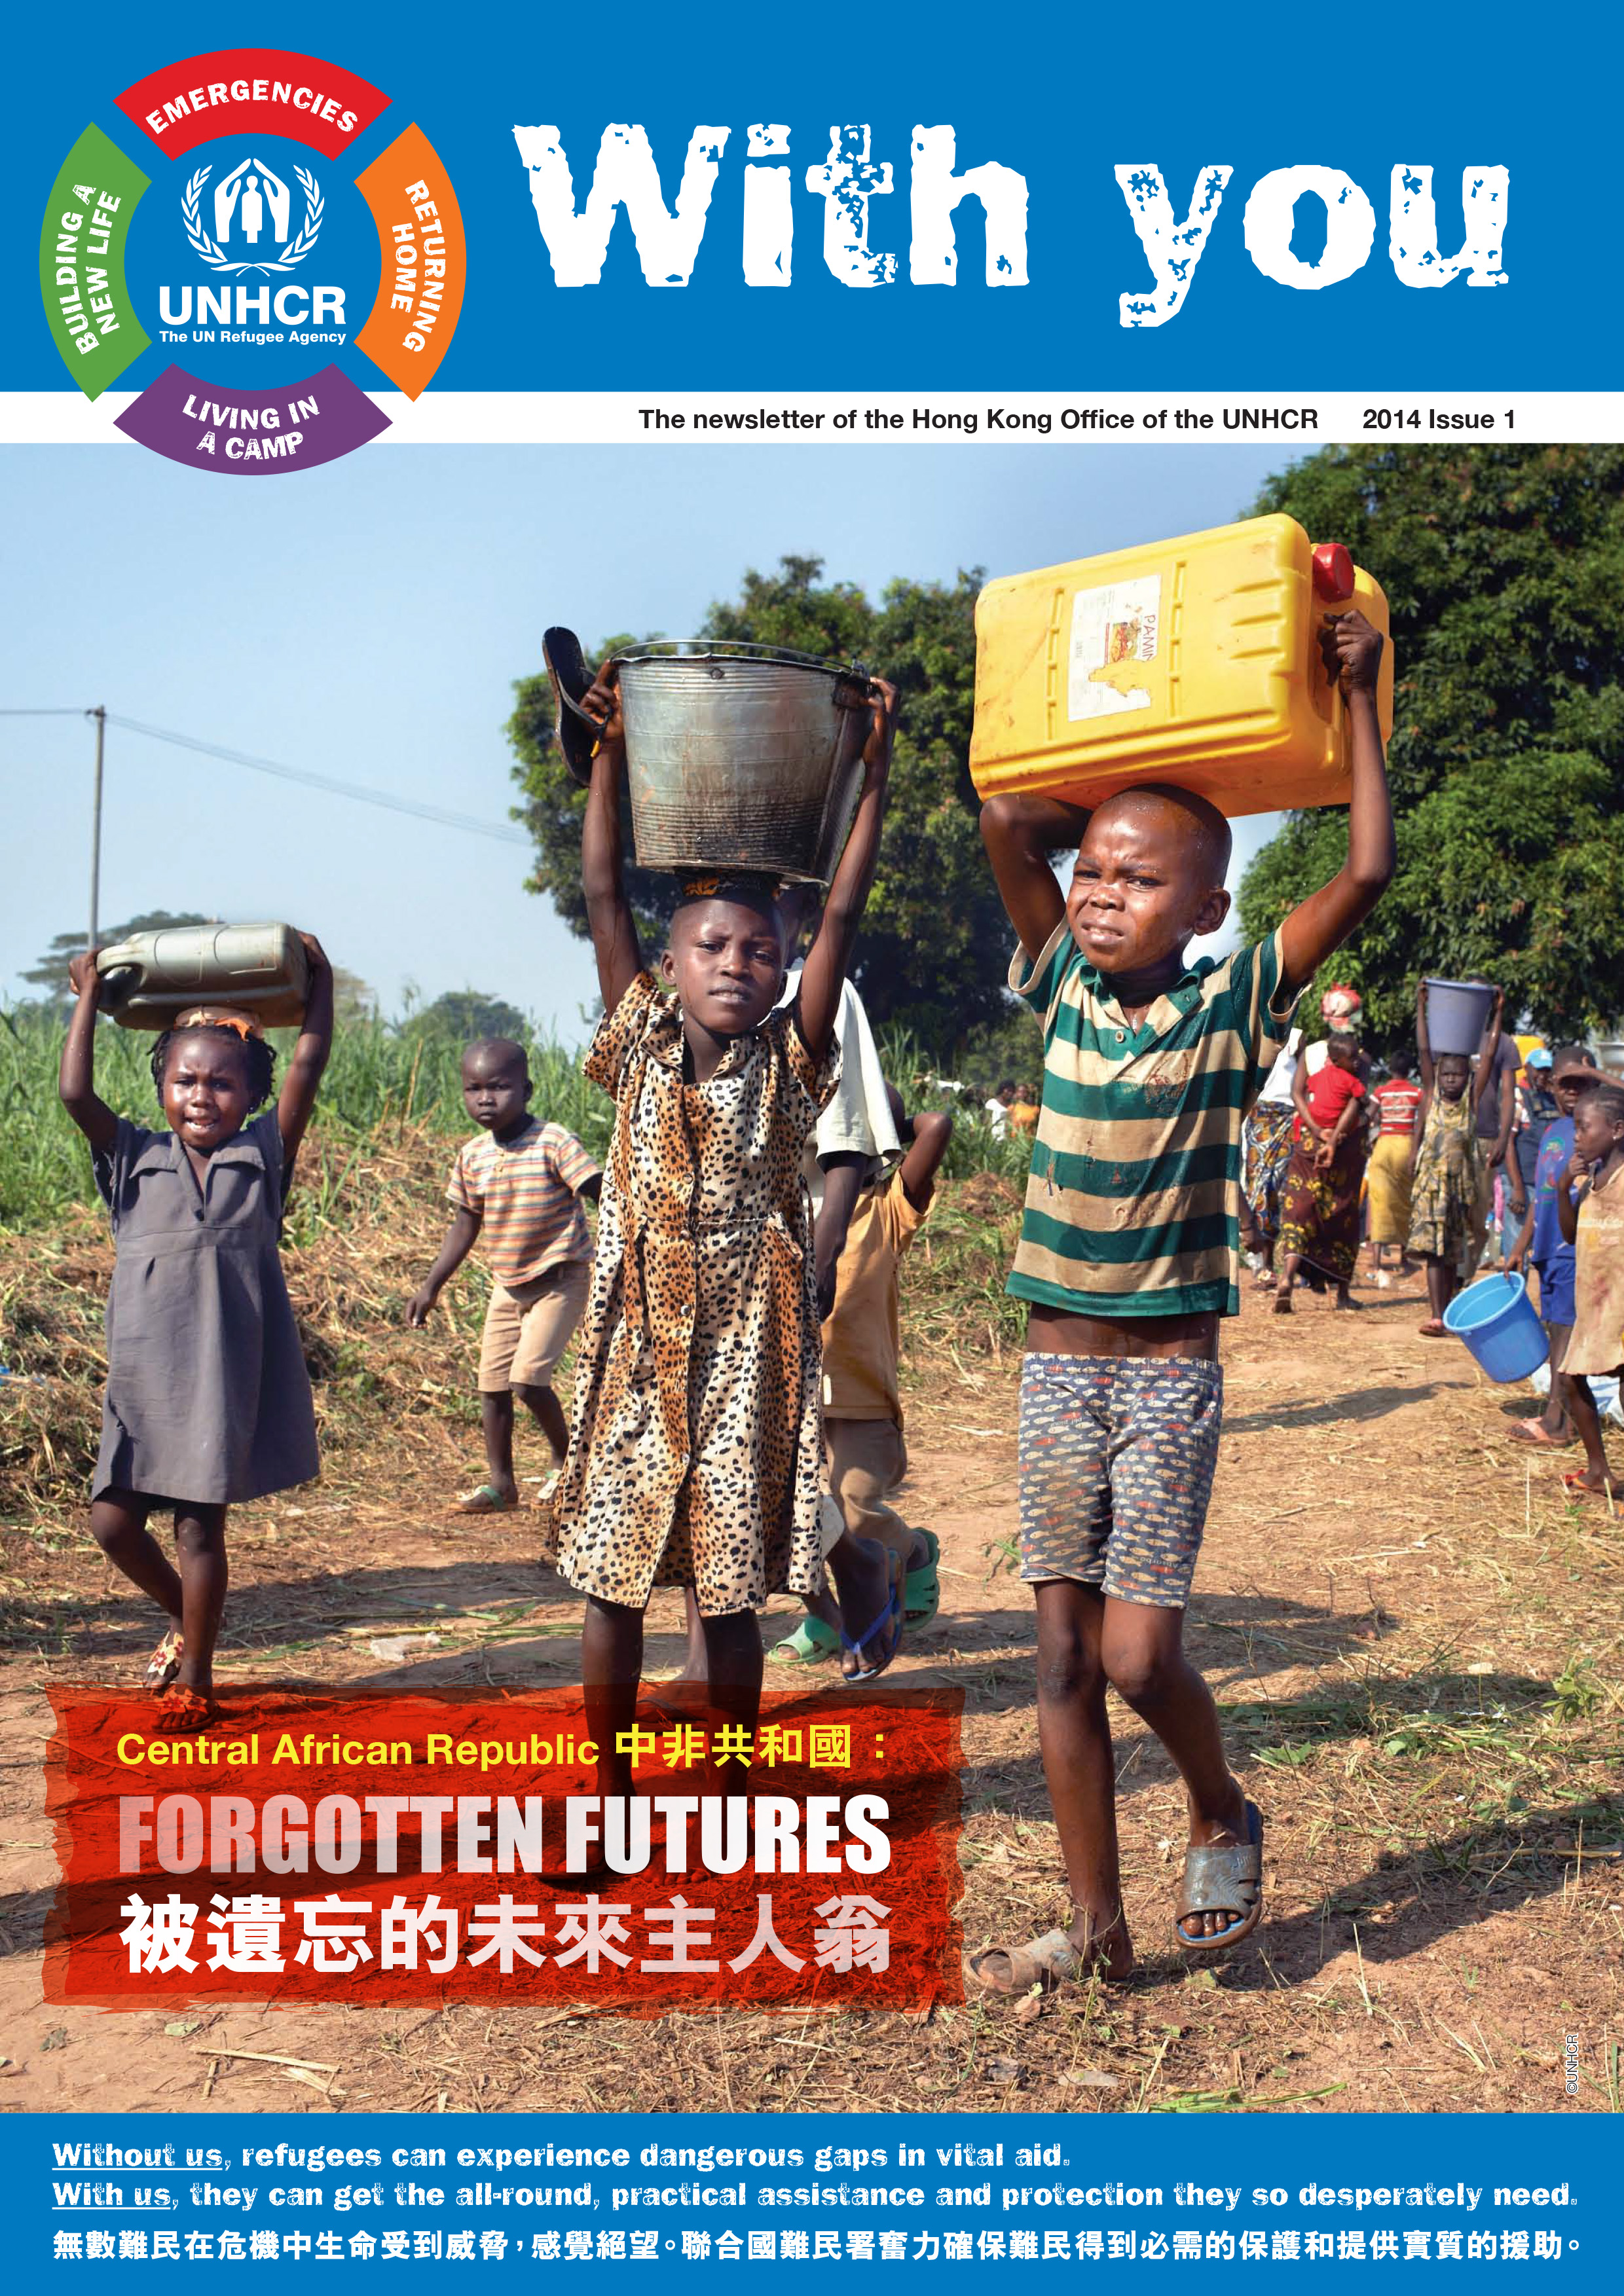 Central African Republic: Forgotten Futures.